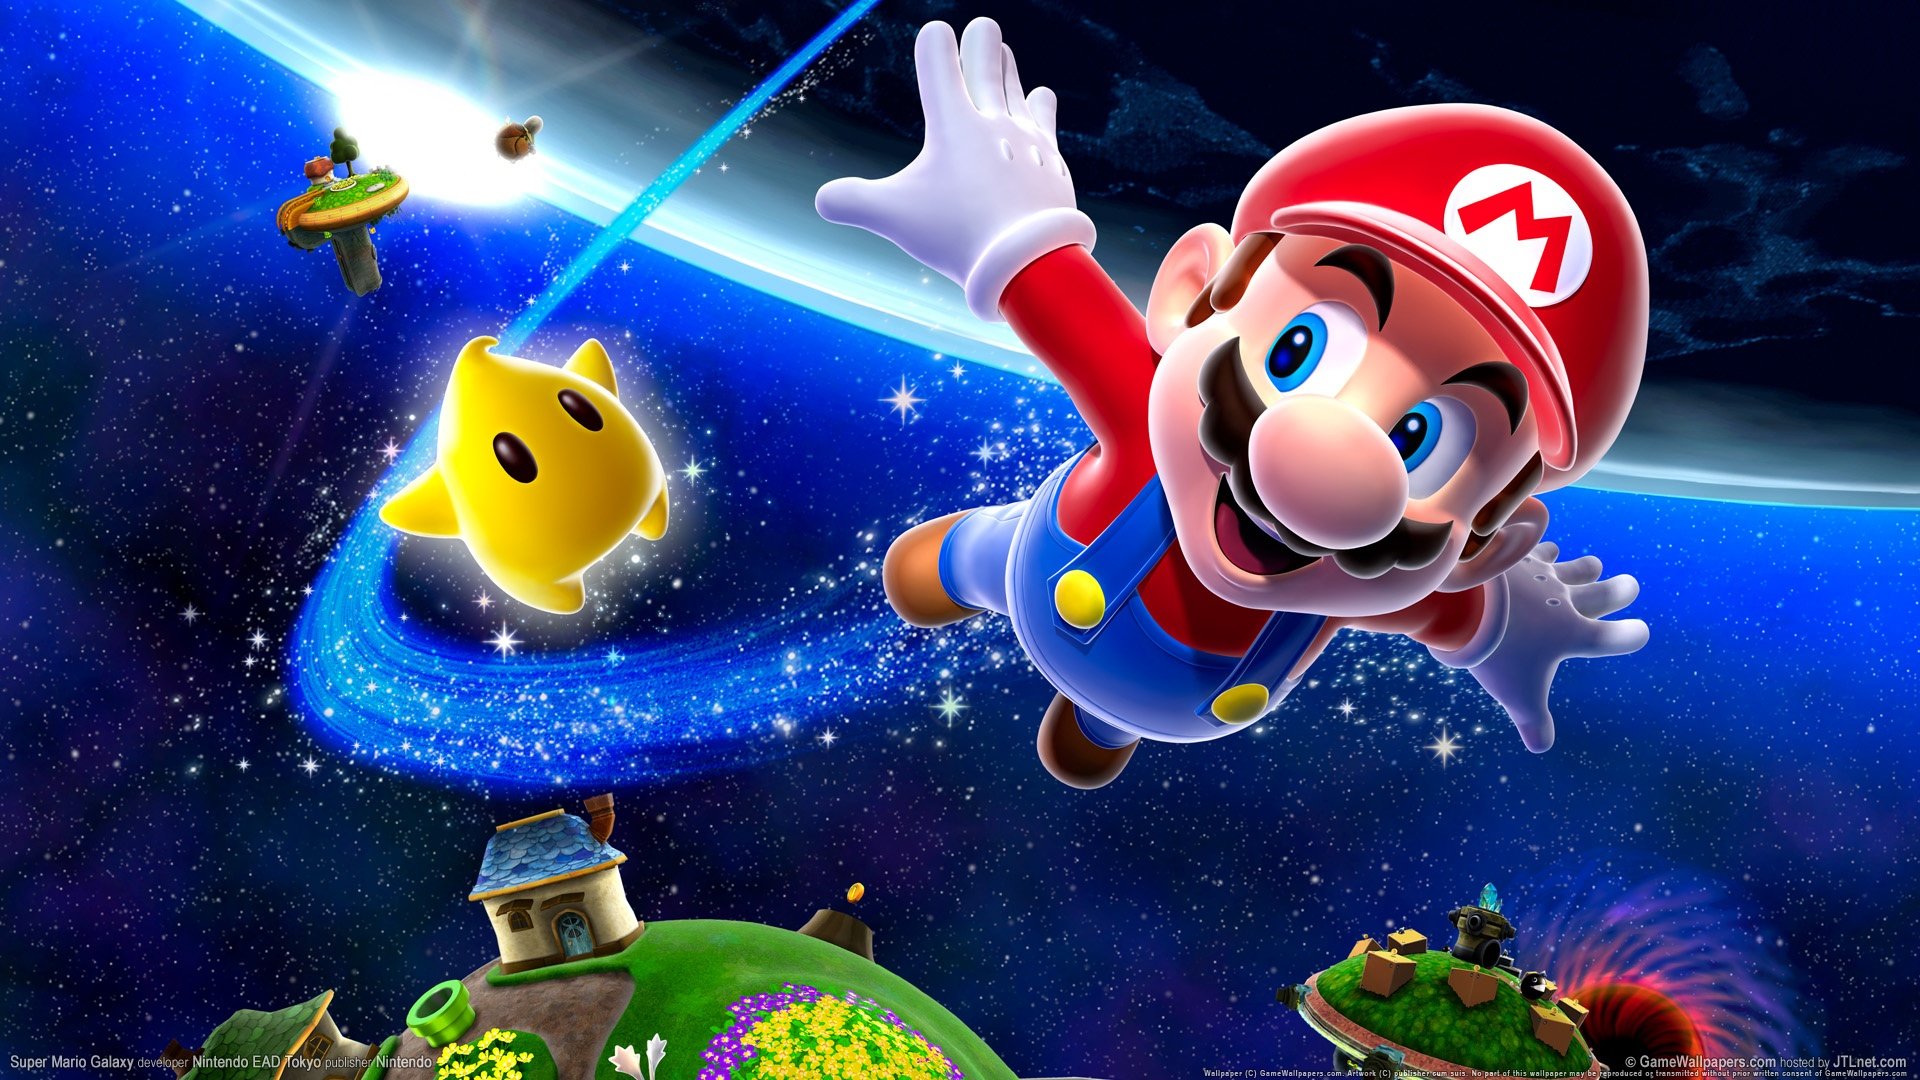 Super Mario Galaxy Wallpapers Hd For Desktop Backgrounds